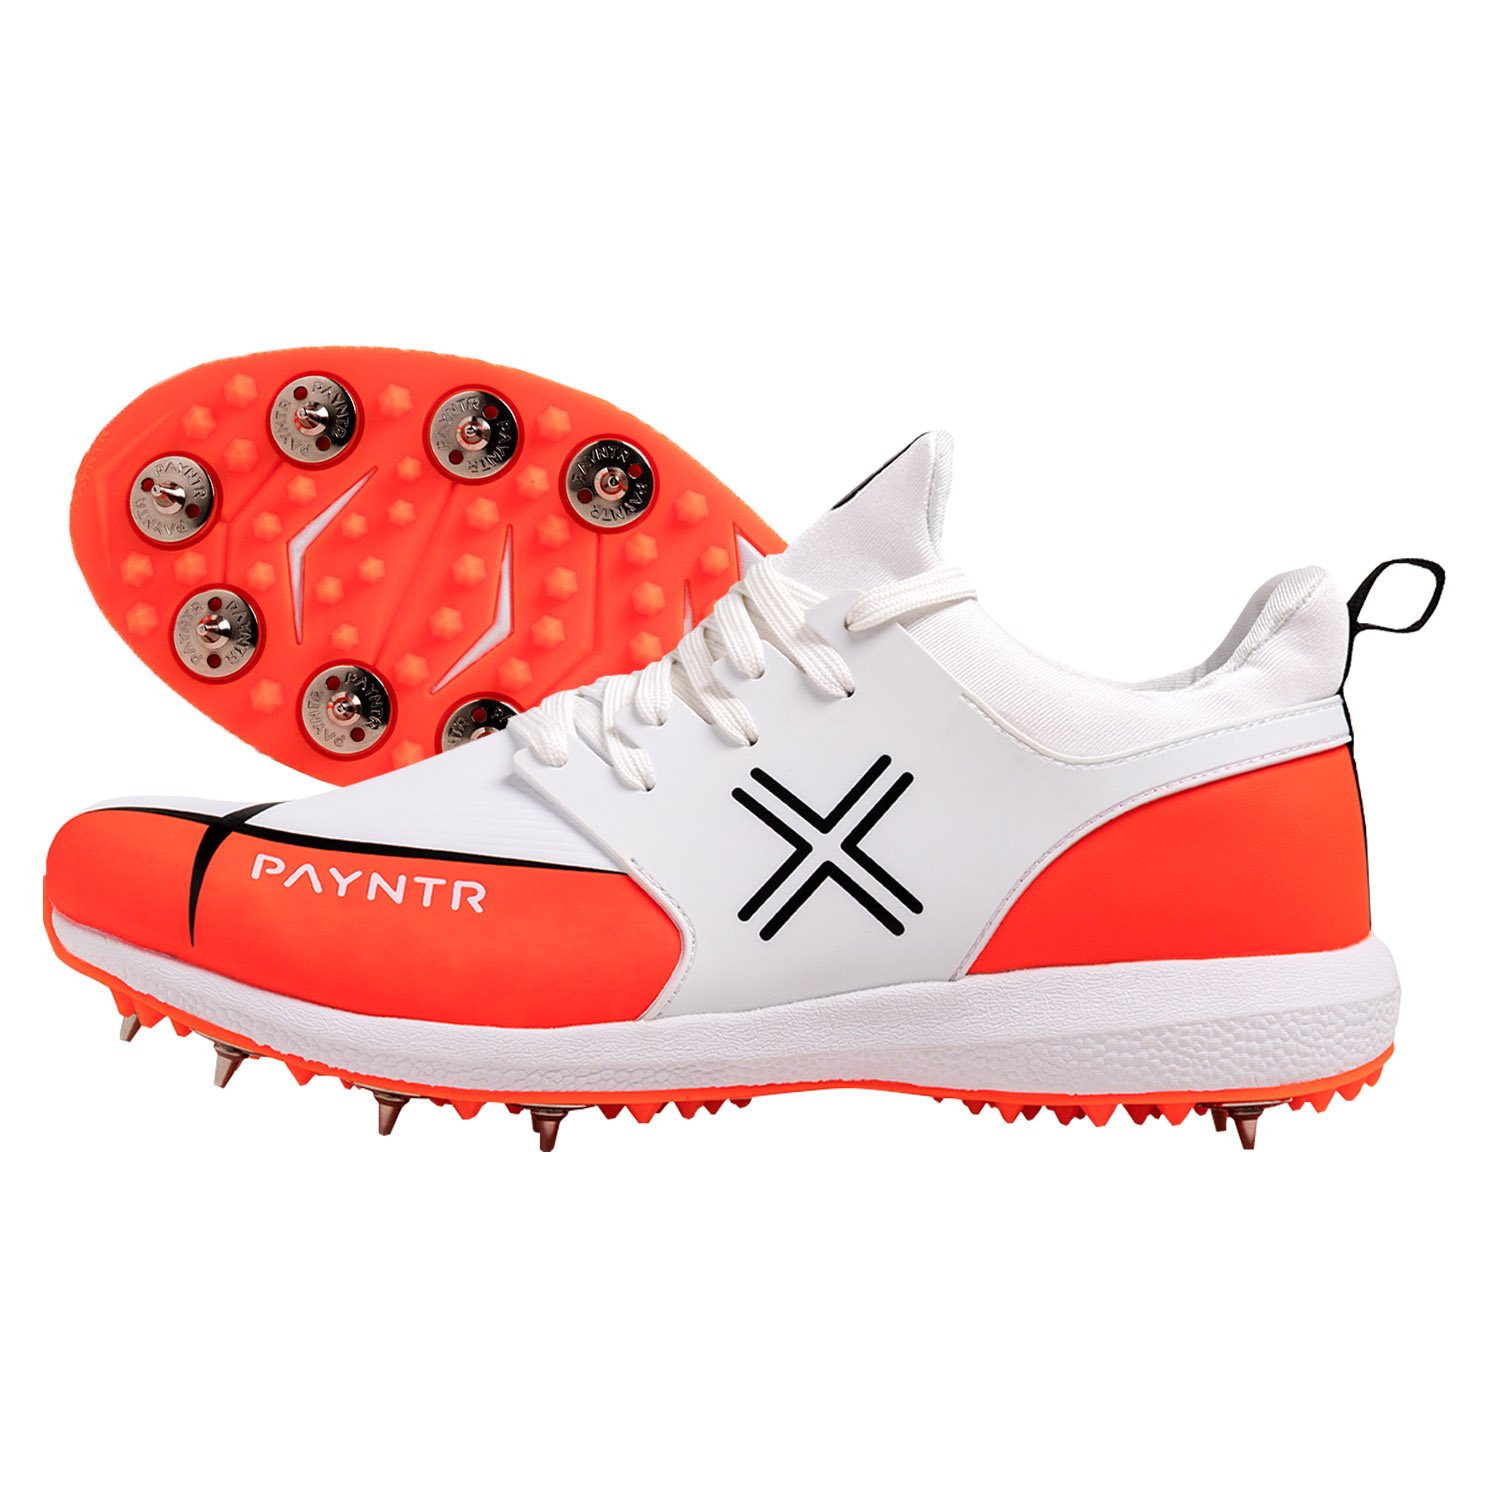 payntr x cricket shoes